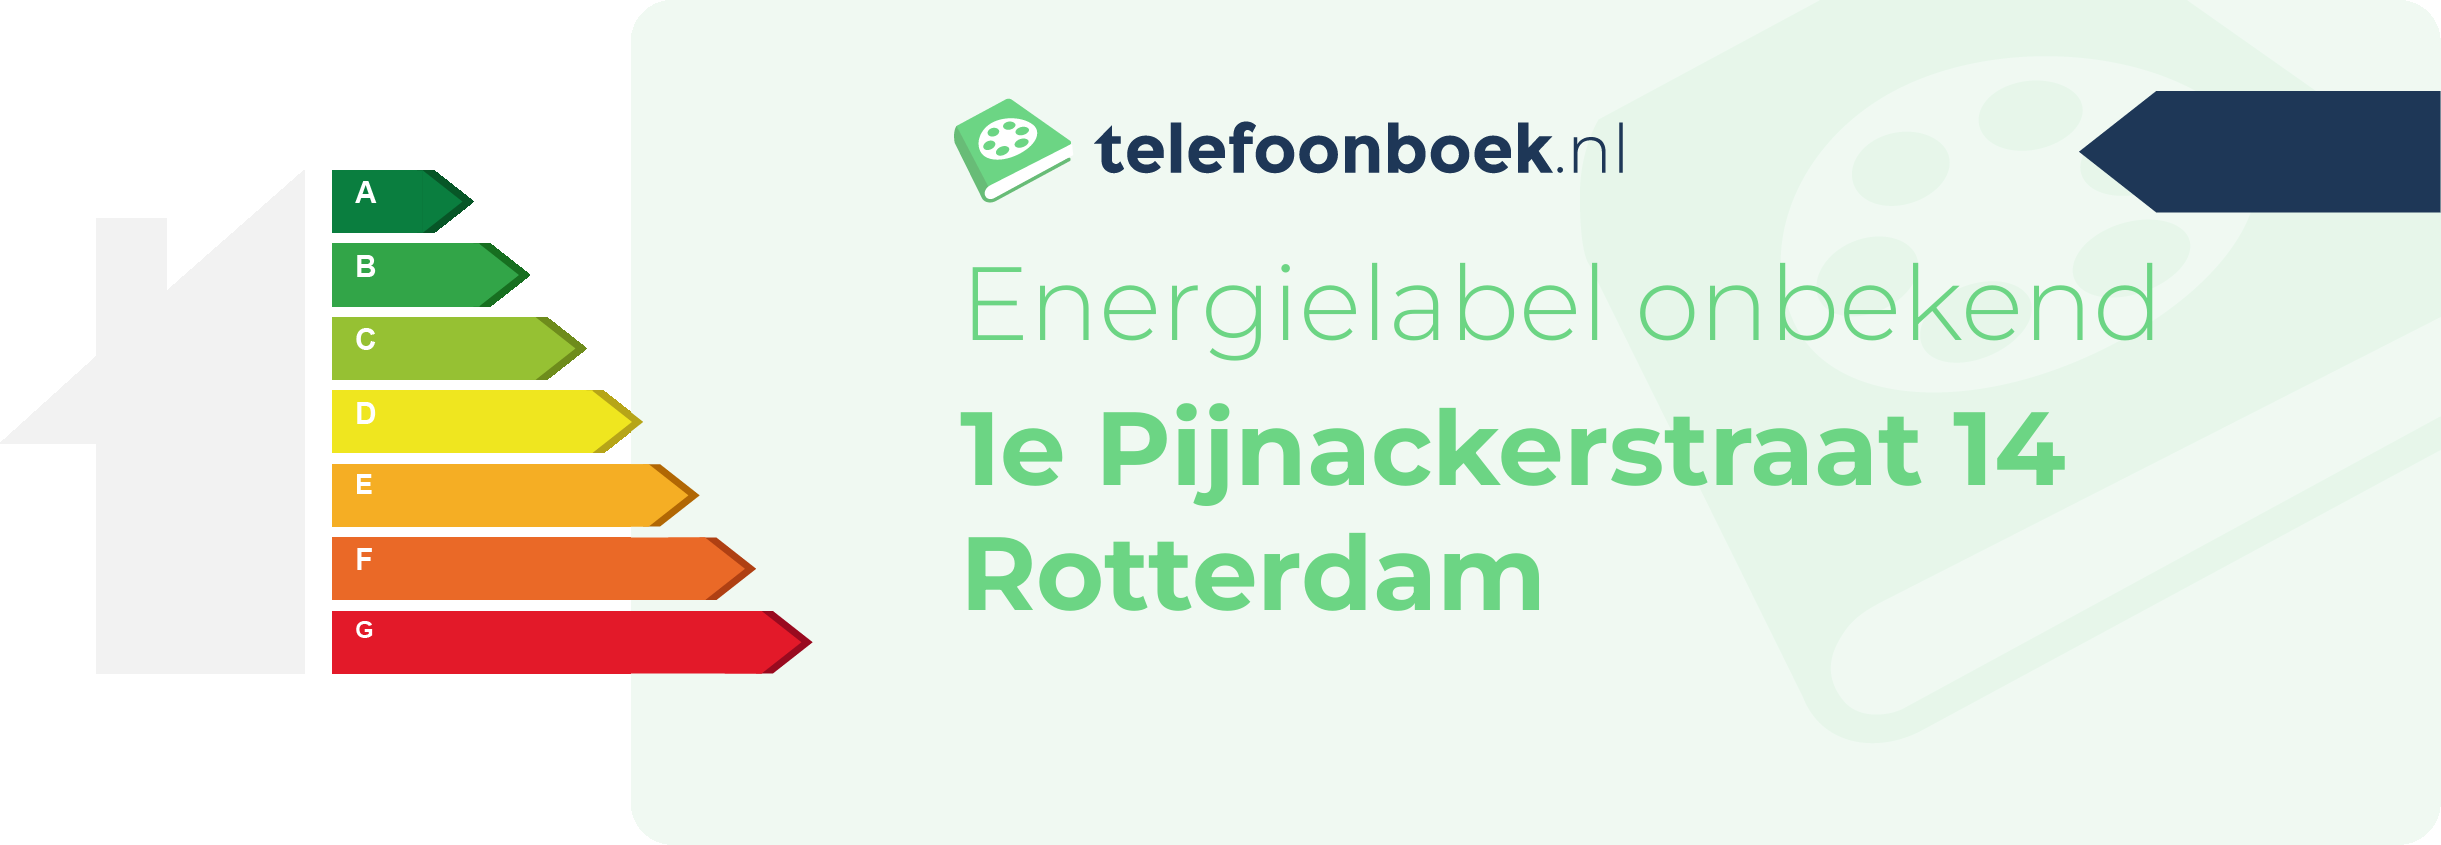 Energielabel 1e Pijnackerstraat 14 Rotterdam